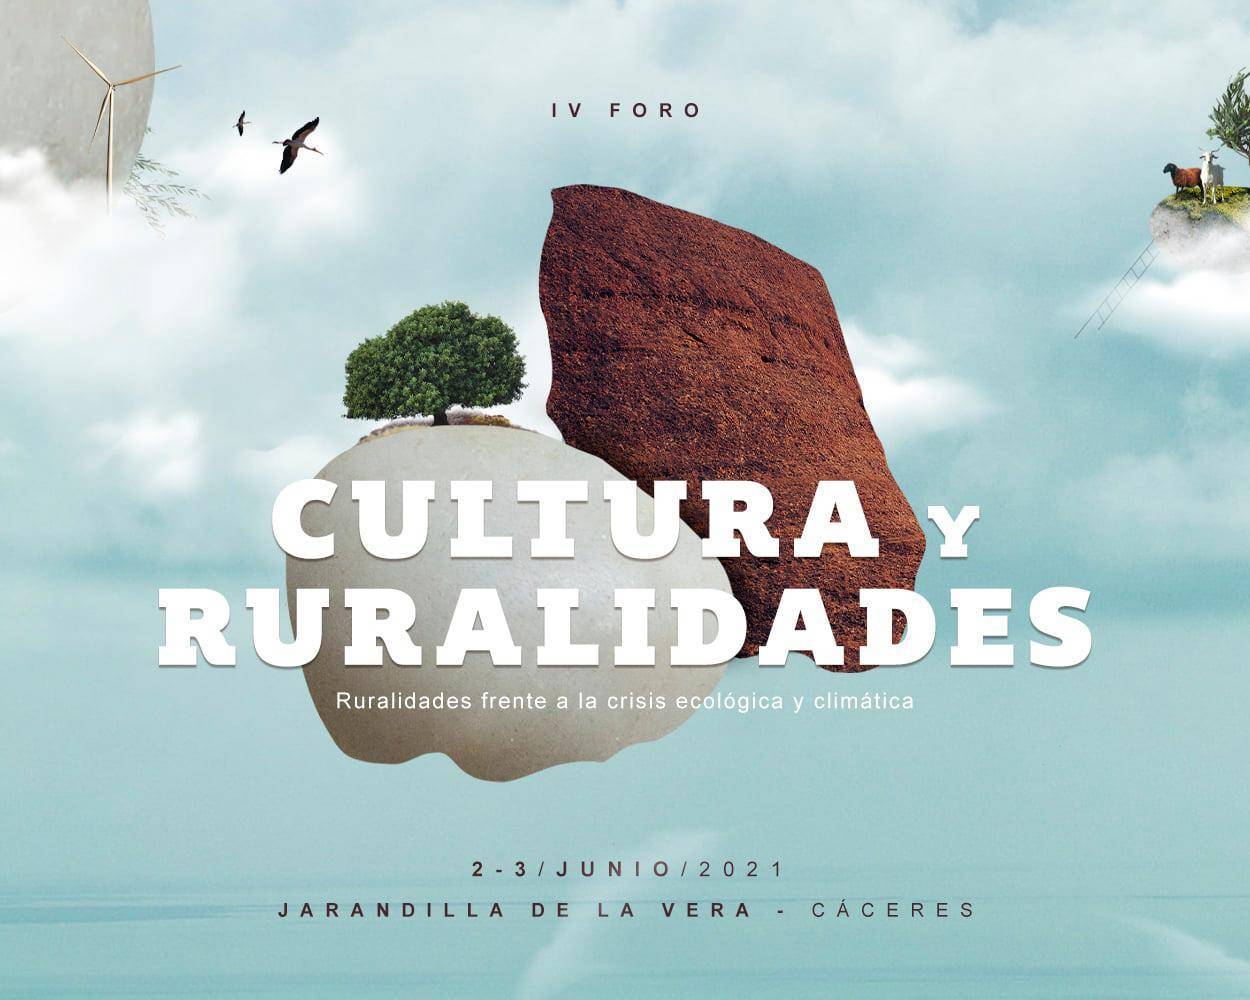 IV foro de cultura y ruralidades - Jarandilla de la Vera (Cáceres)